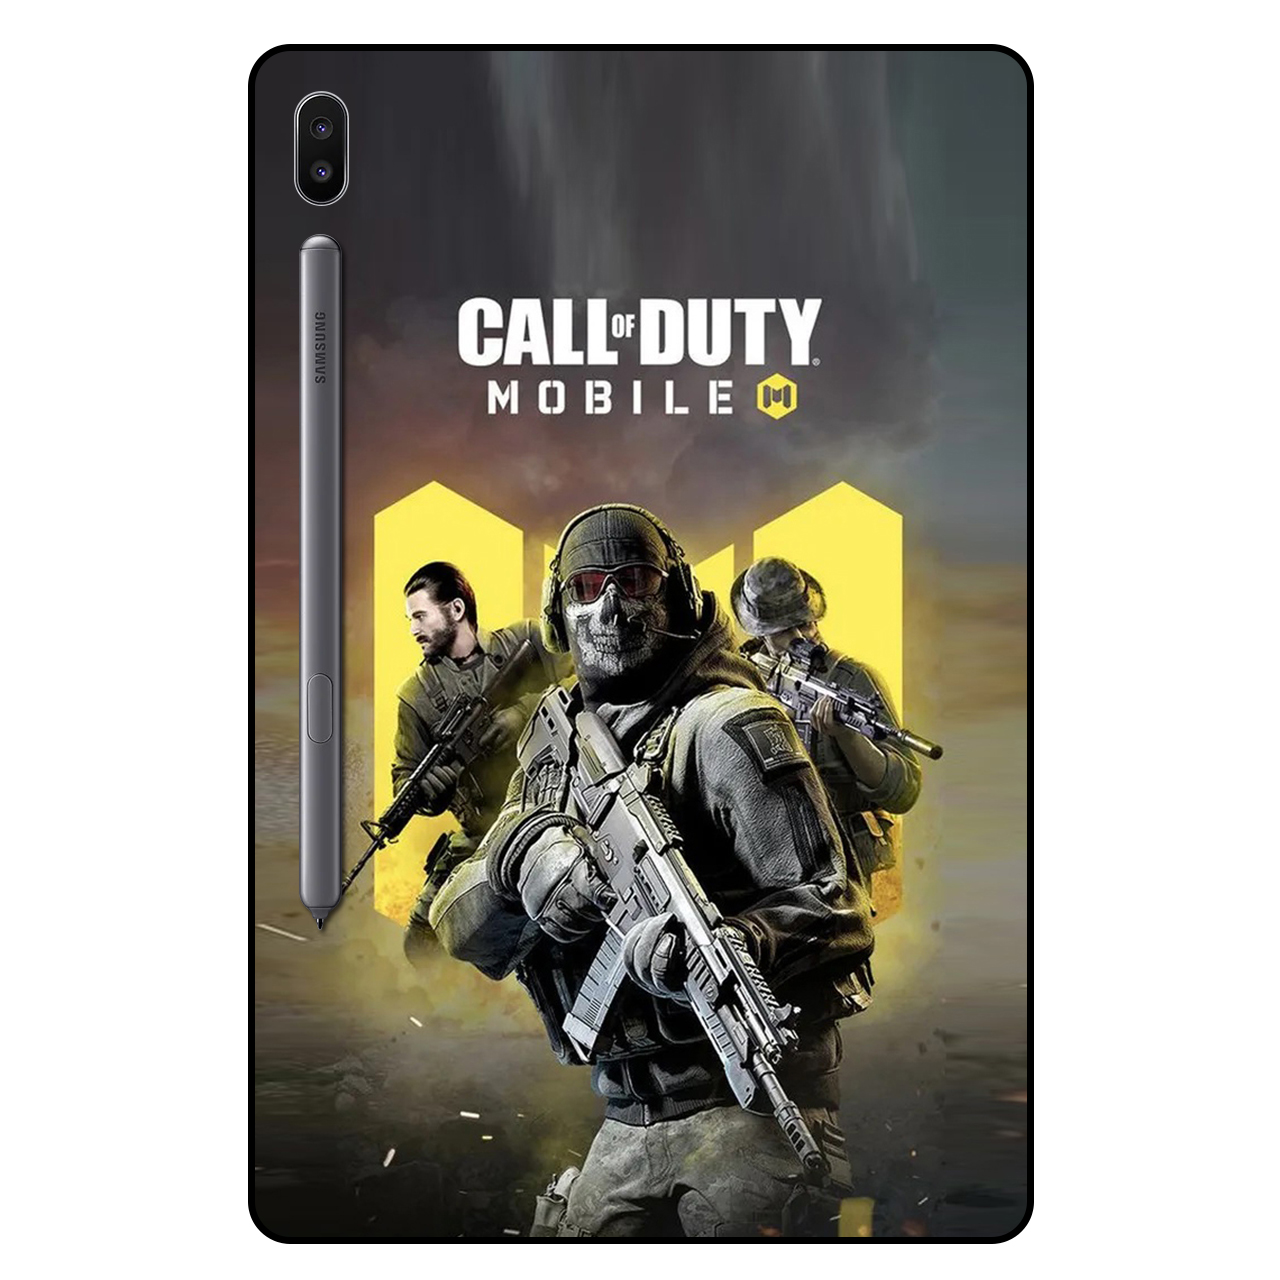 کاور مگافون طرح کال آف دیوتی مدل 8280 مناسب برای تبلت سامسونگ Galaxy Tab S6 10.5 2019 / T860 / T865 